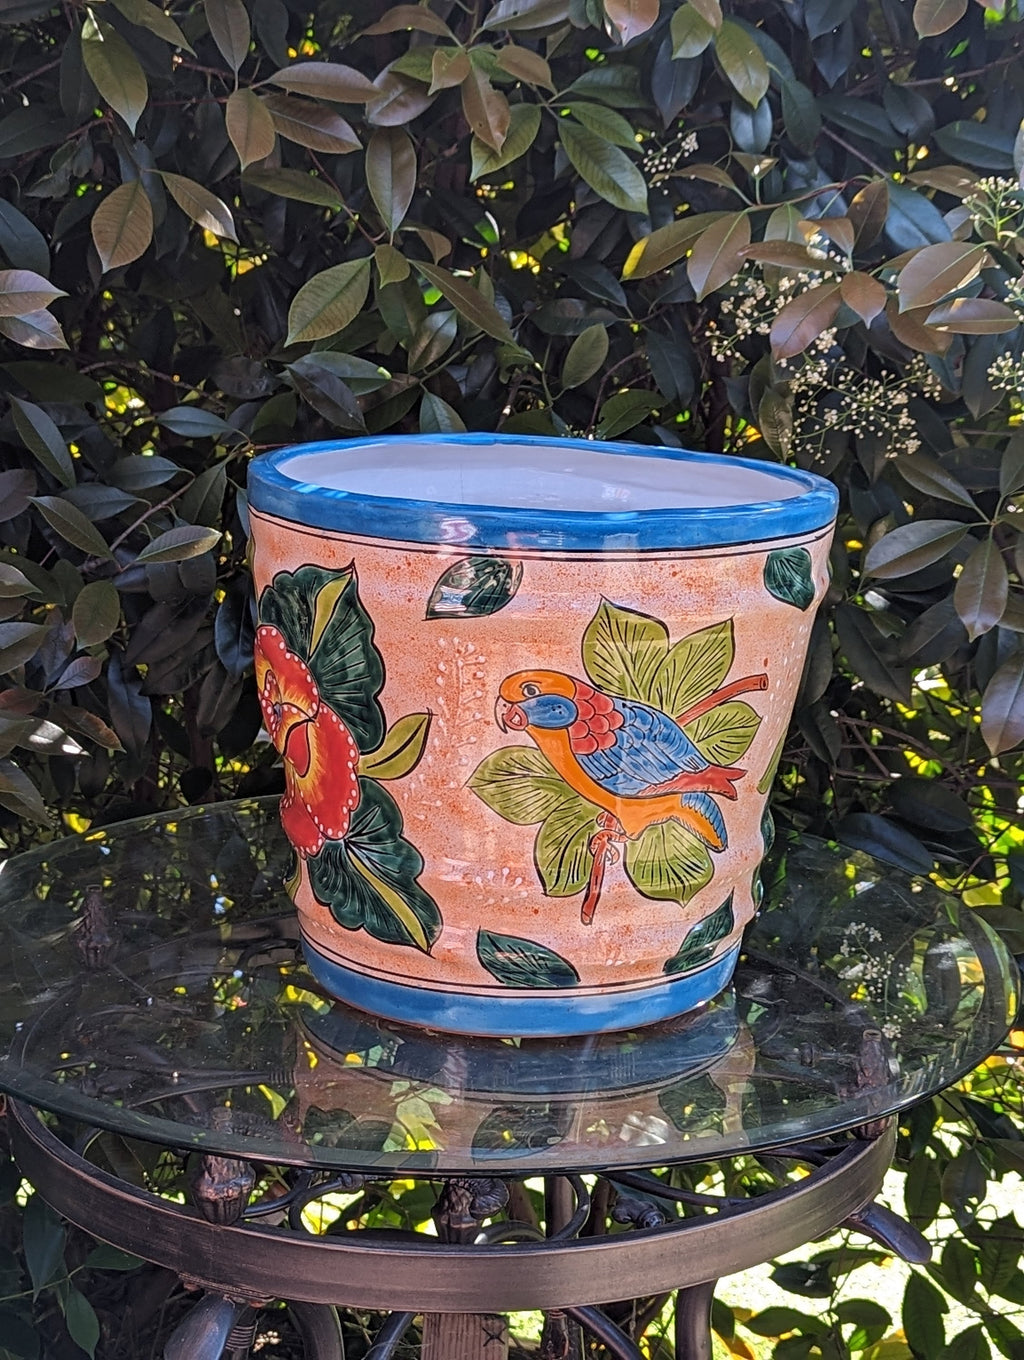 10.5" Round Ceramic Planter is Handmade Mexican Pottery for Outdoor Garden Decor, Indoor Home Decor, or Centerpiece